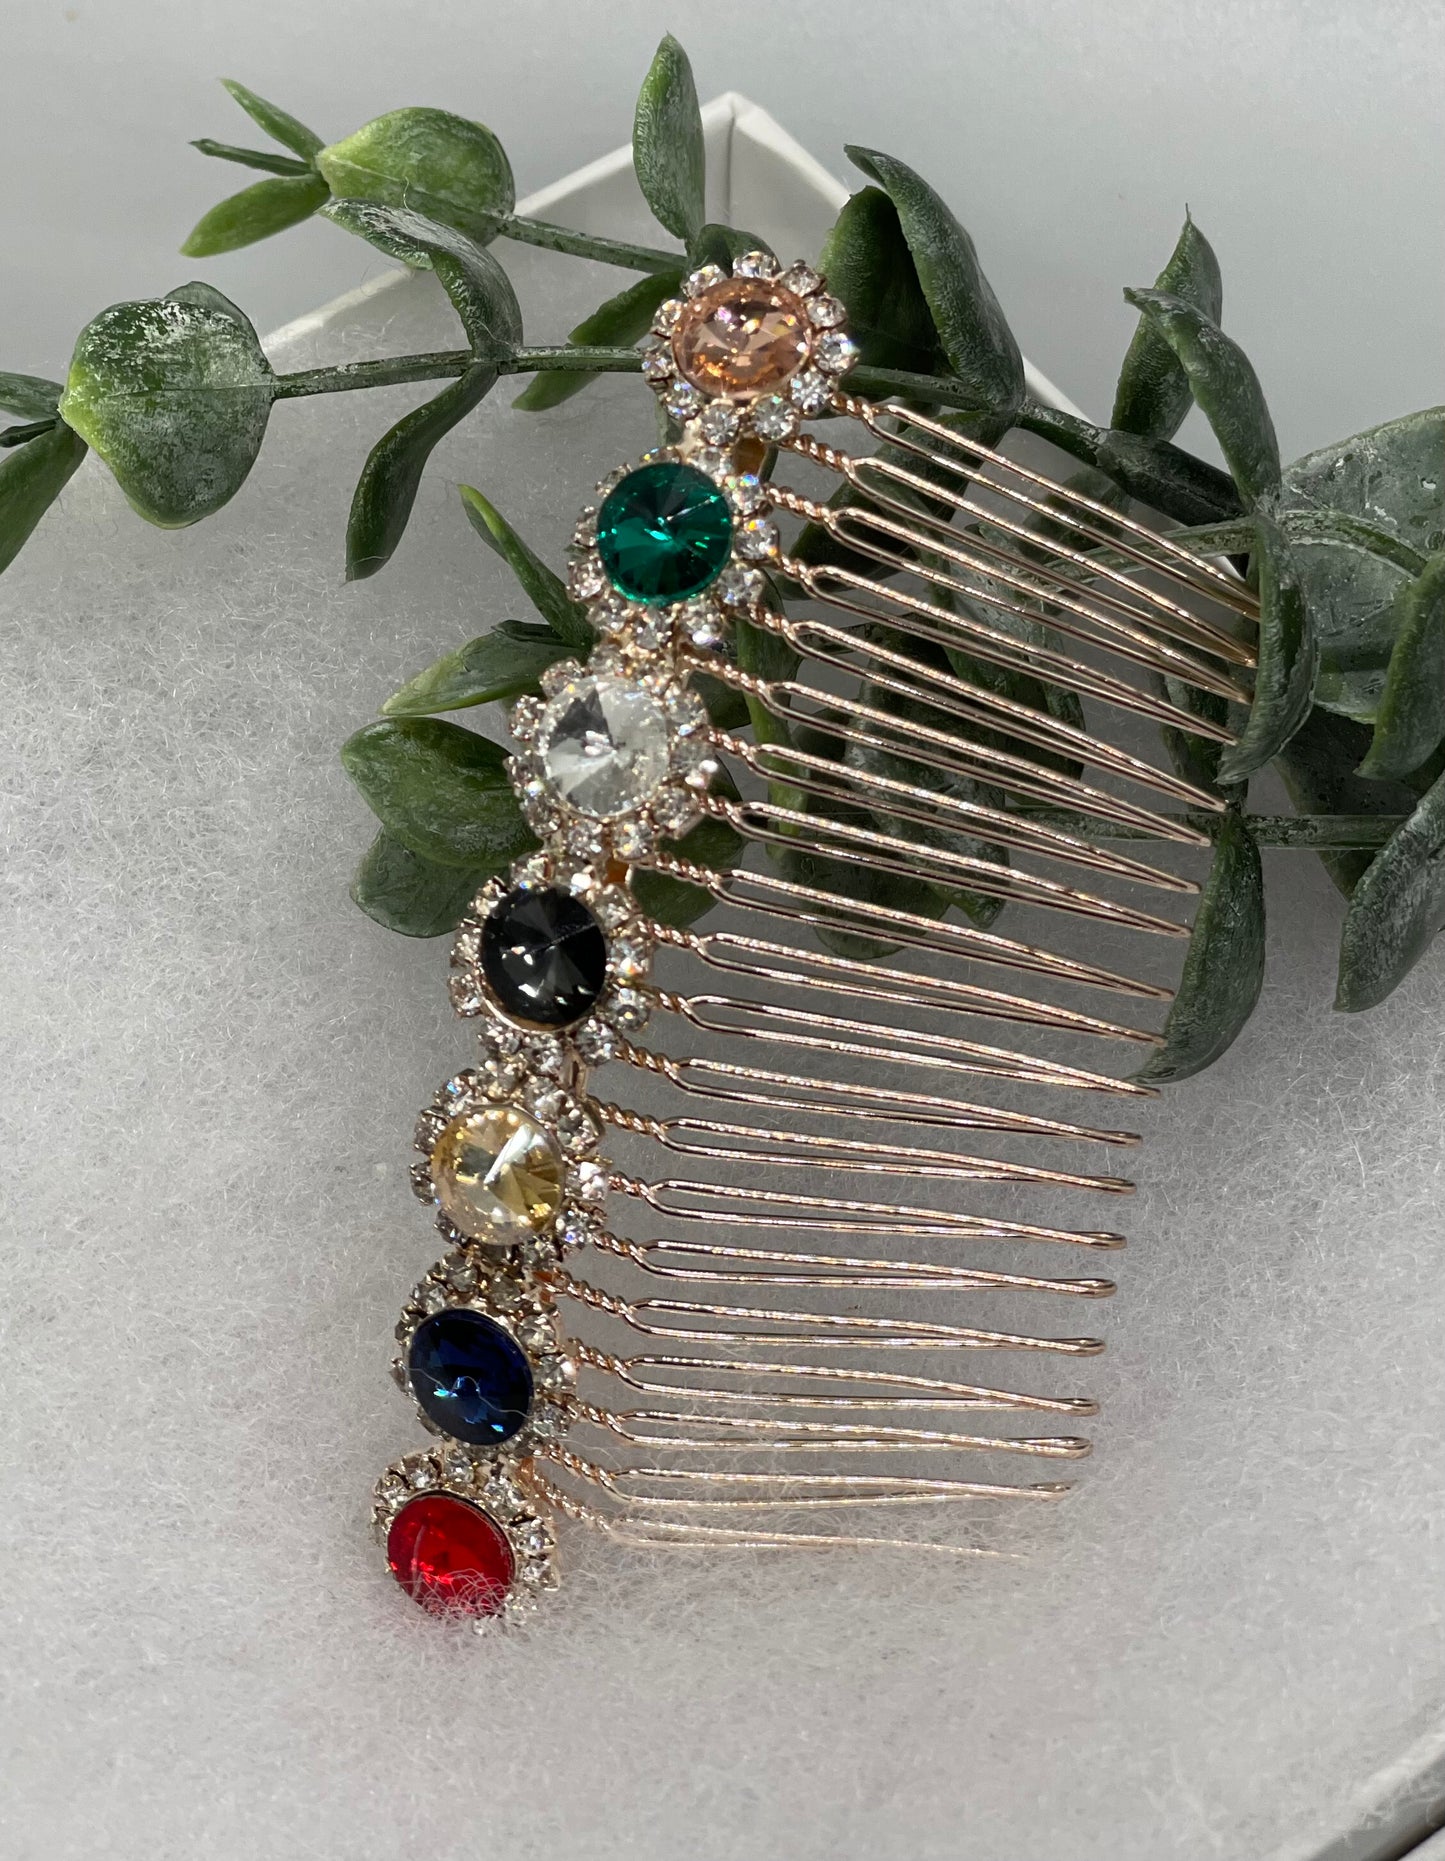 Rainbow crystal Rhinestone Hair 3.5”Comb Rose Gold wedding hair accessory bride princess shower engagement formal accessory